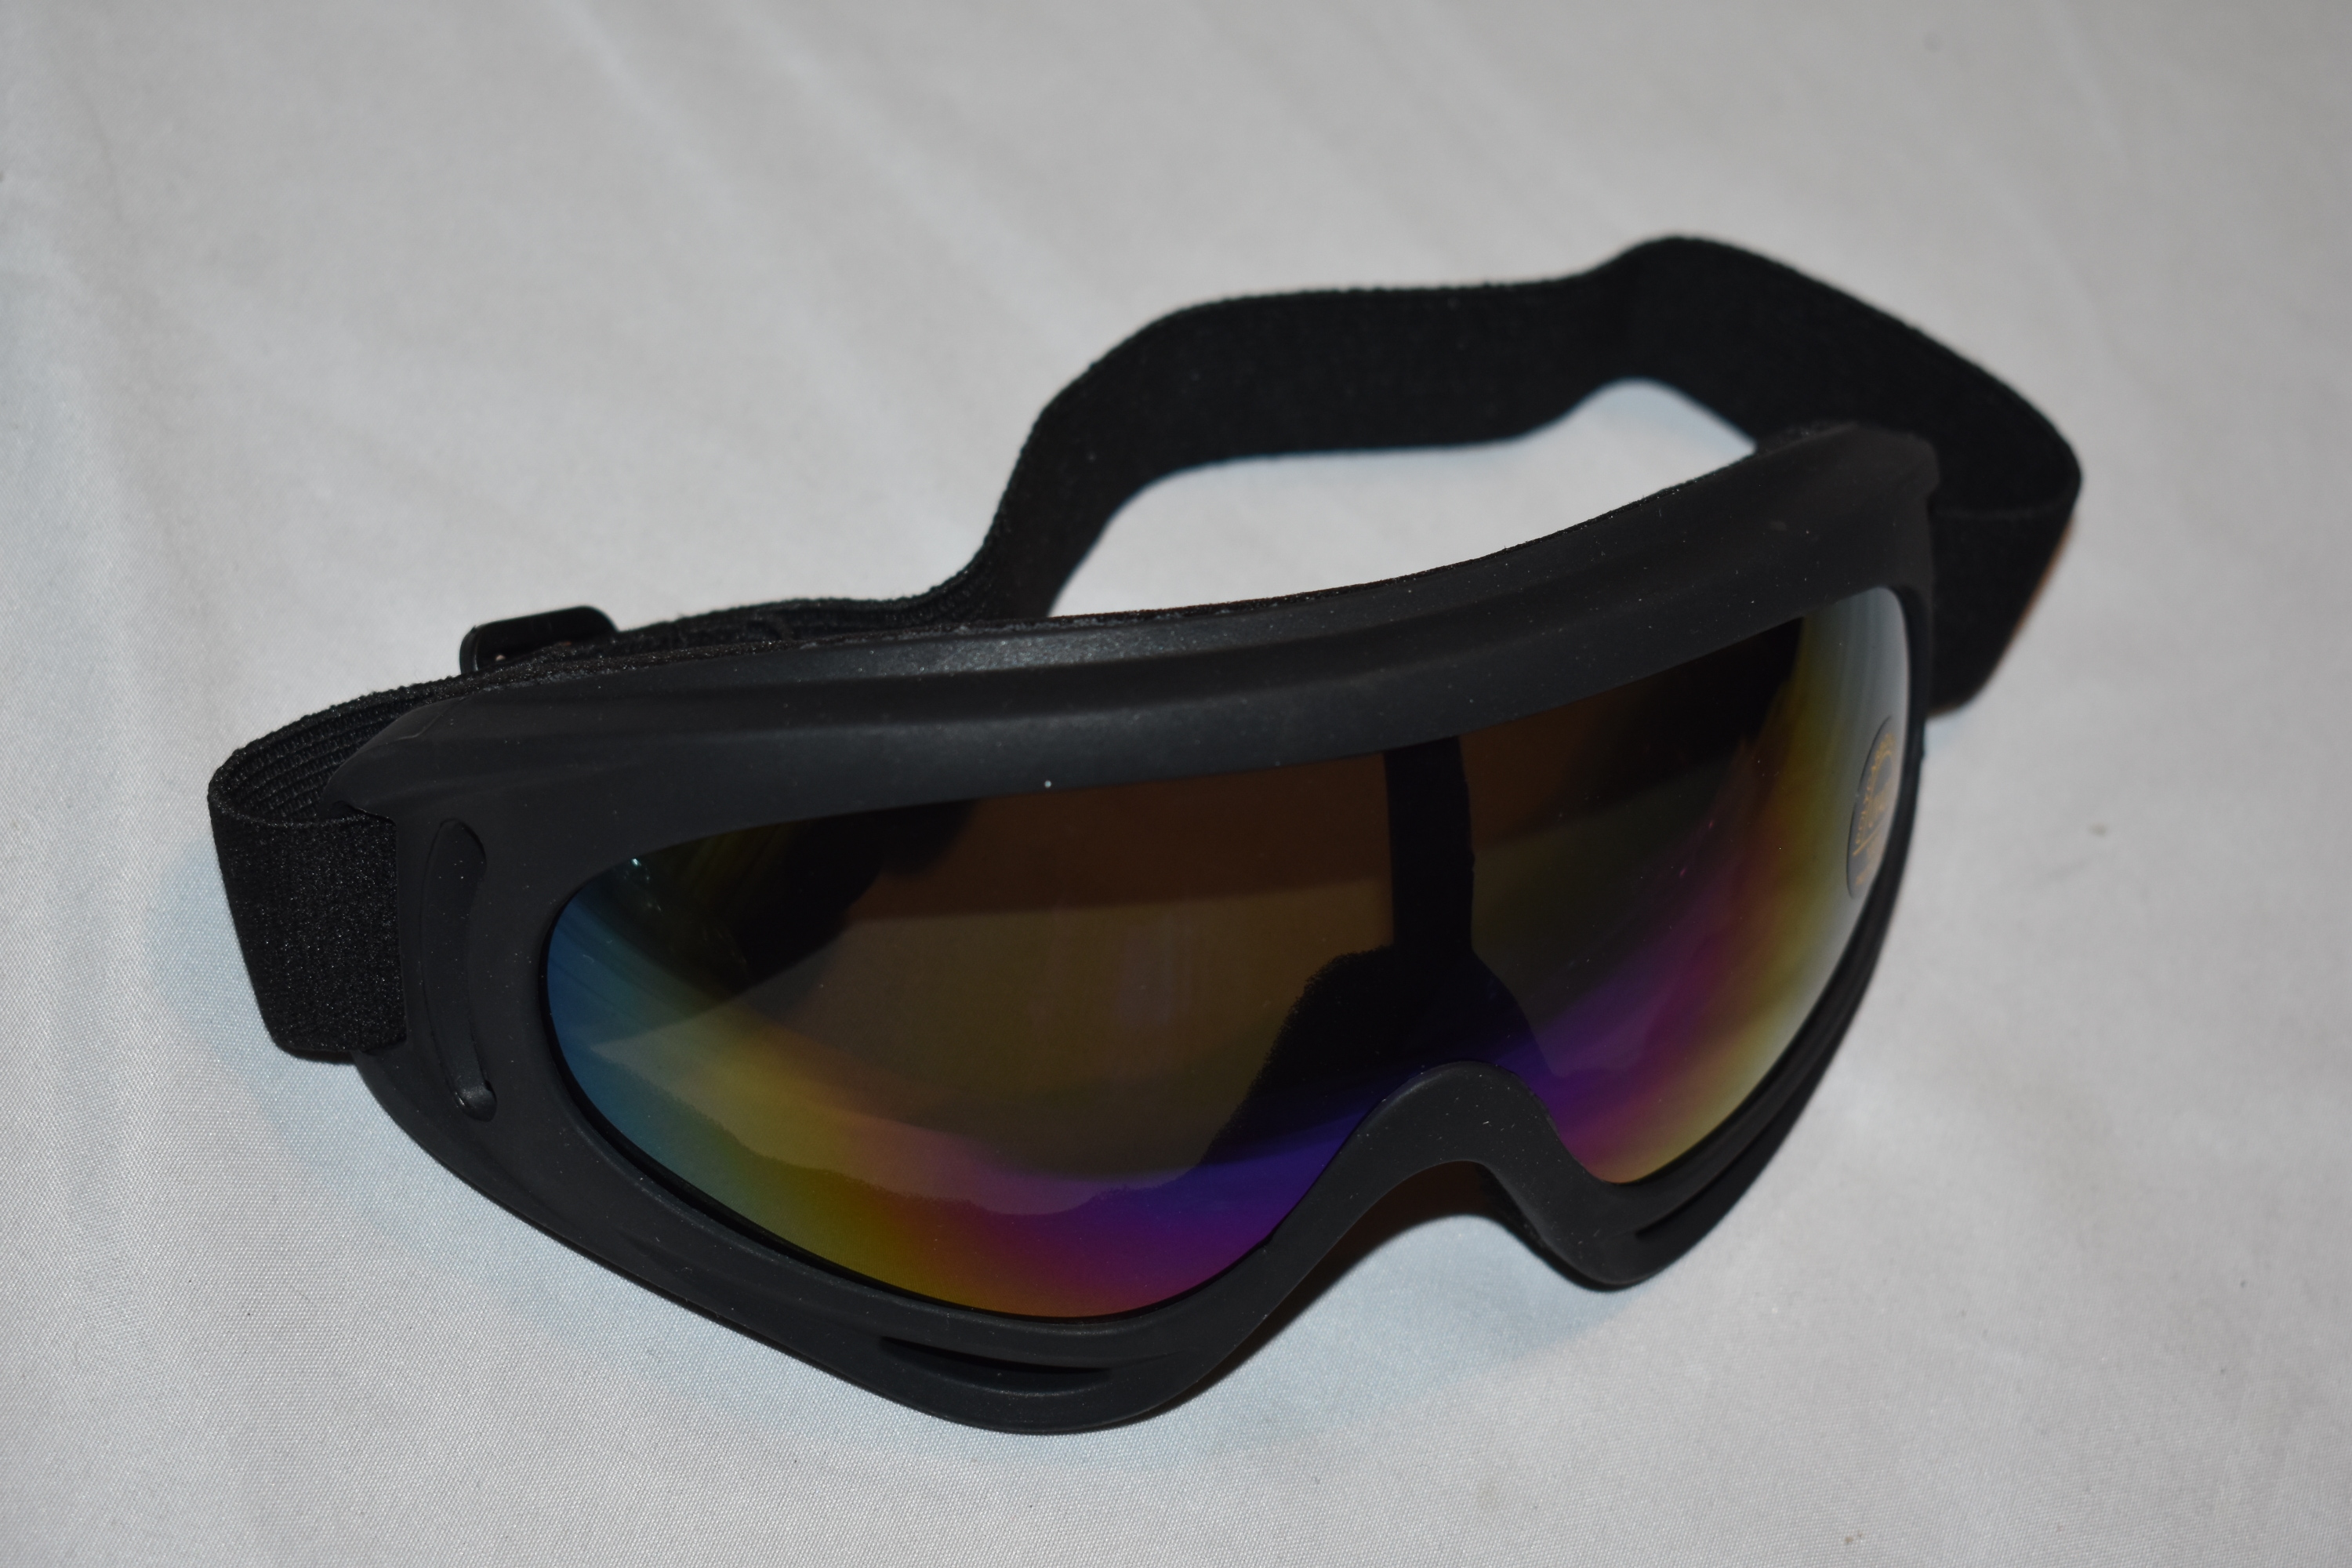 Polycarbonate UV400 Sports Goggles, Black - New Condition!